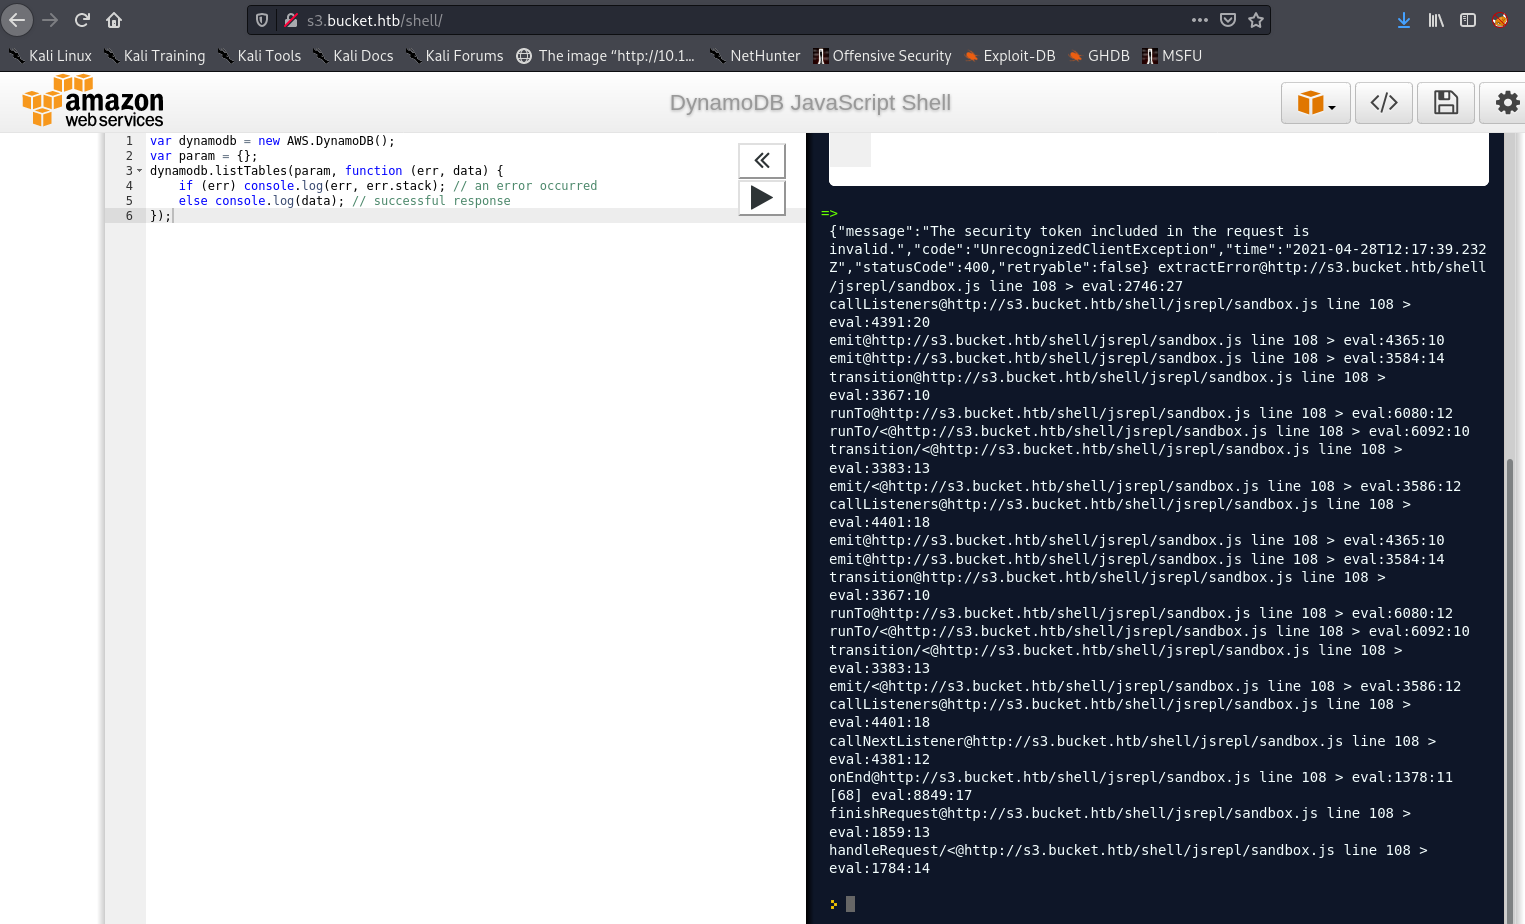 Executing some Javascript SDK code